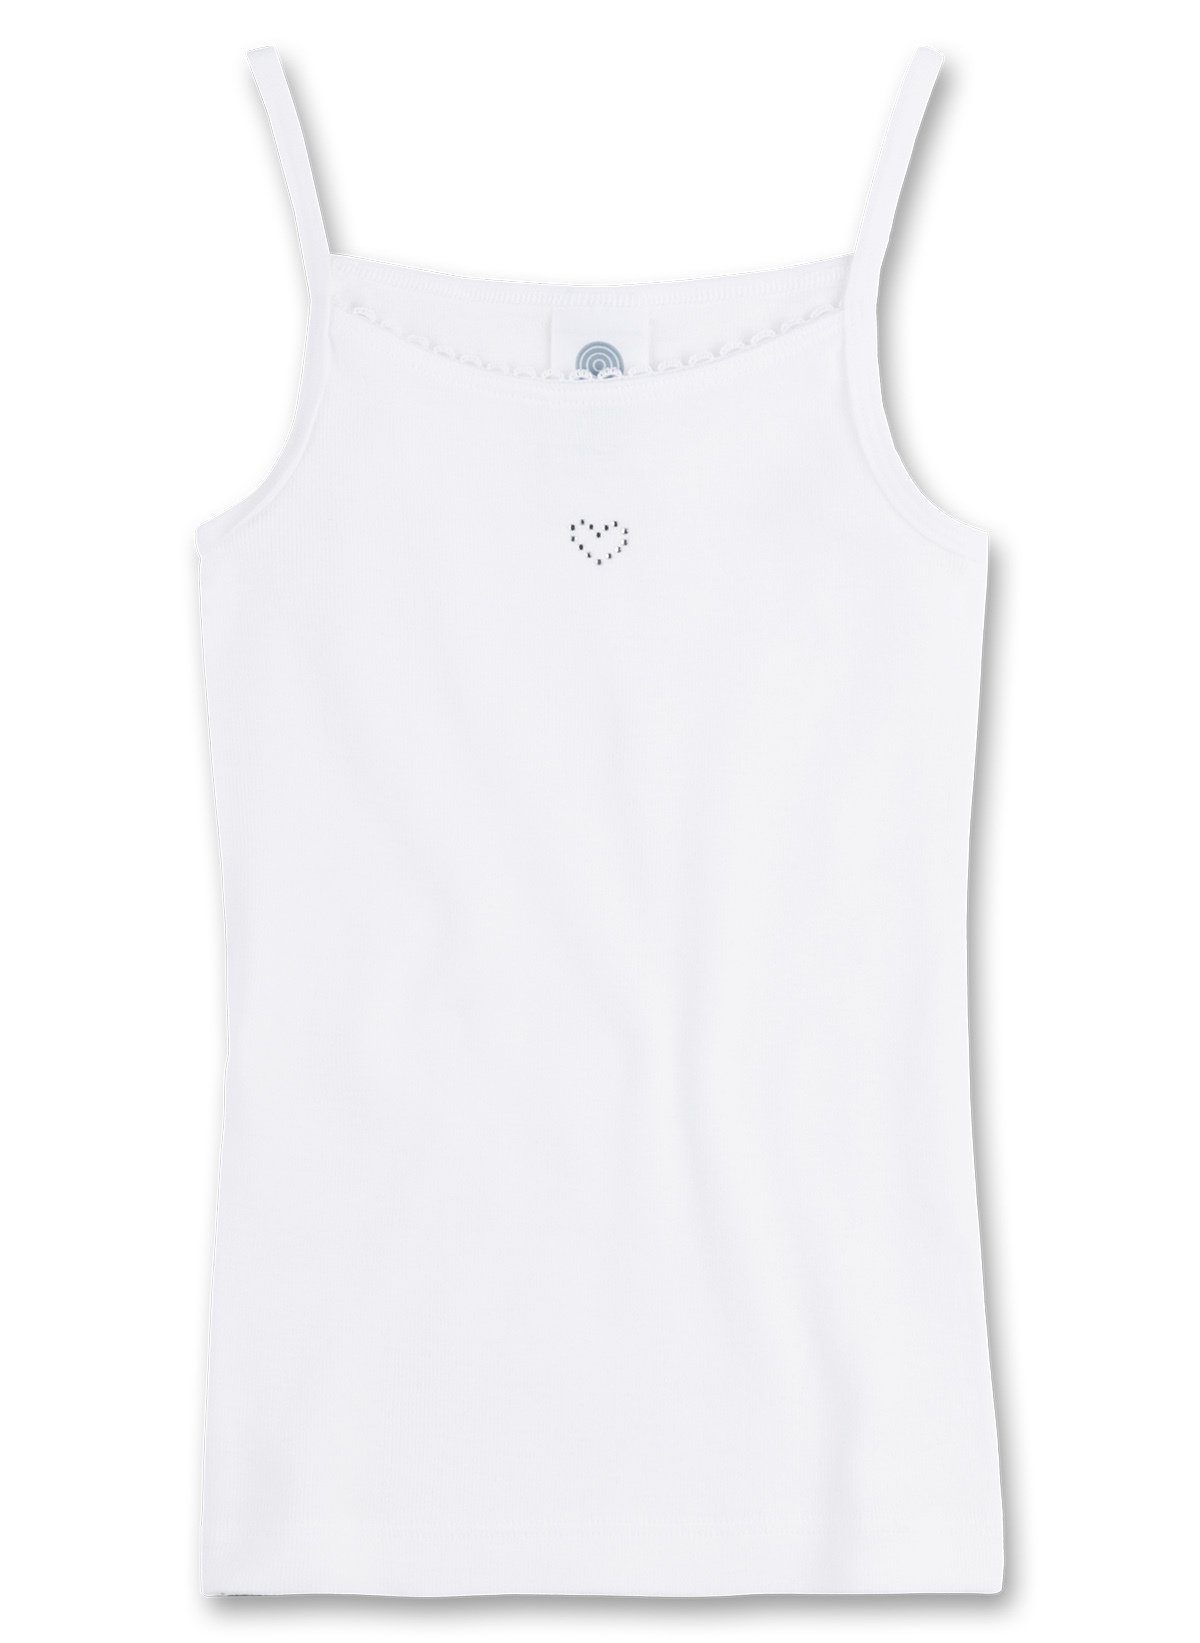 kolossal Sanetta Unterhemd Basic - Mädchen Herzmotiv Unterhemd Shirt mit